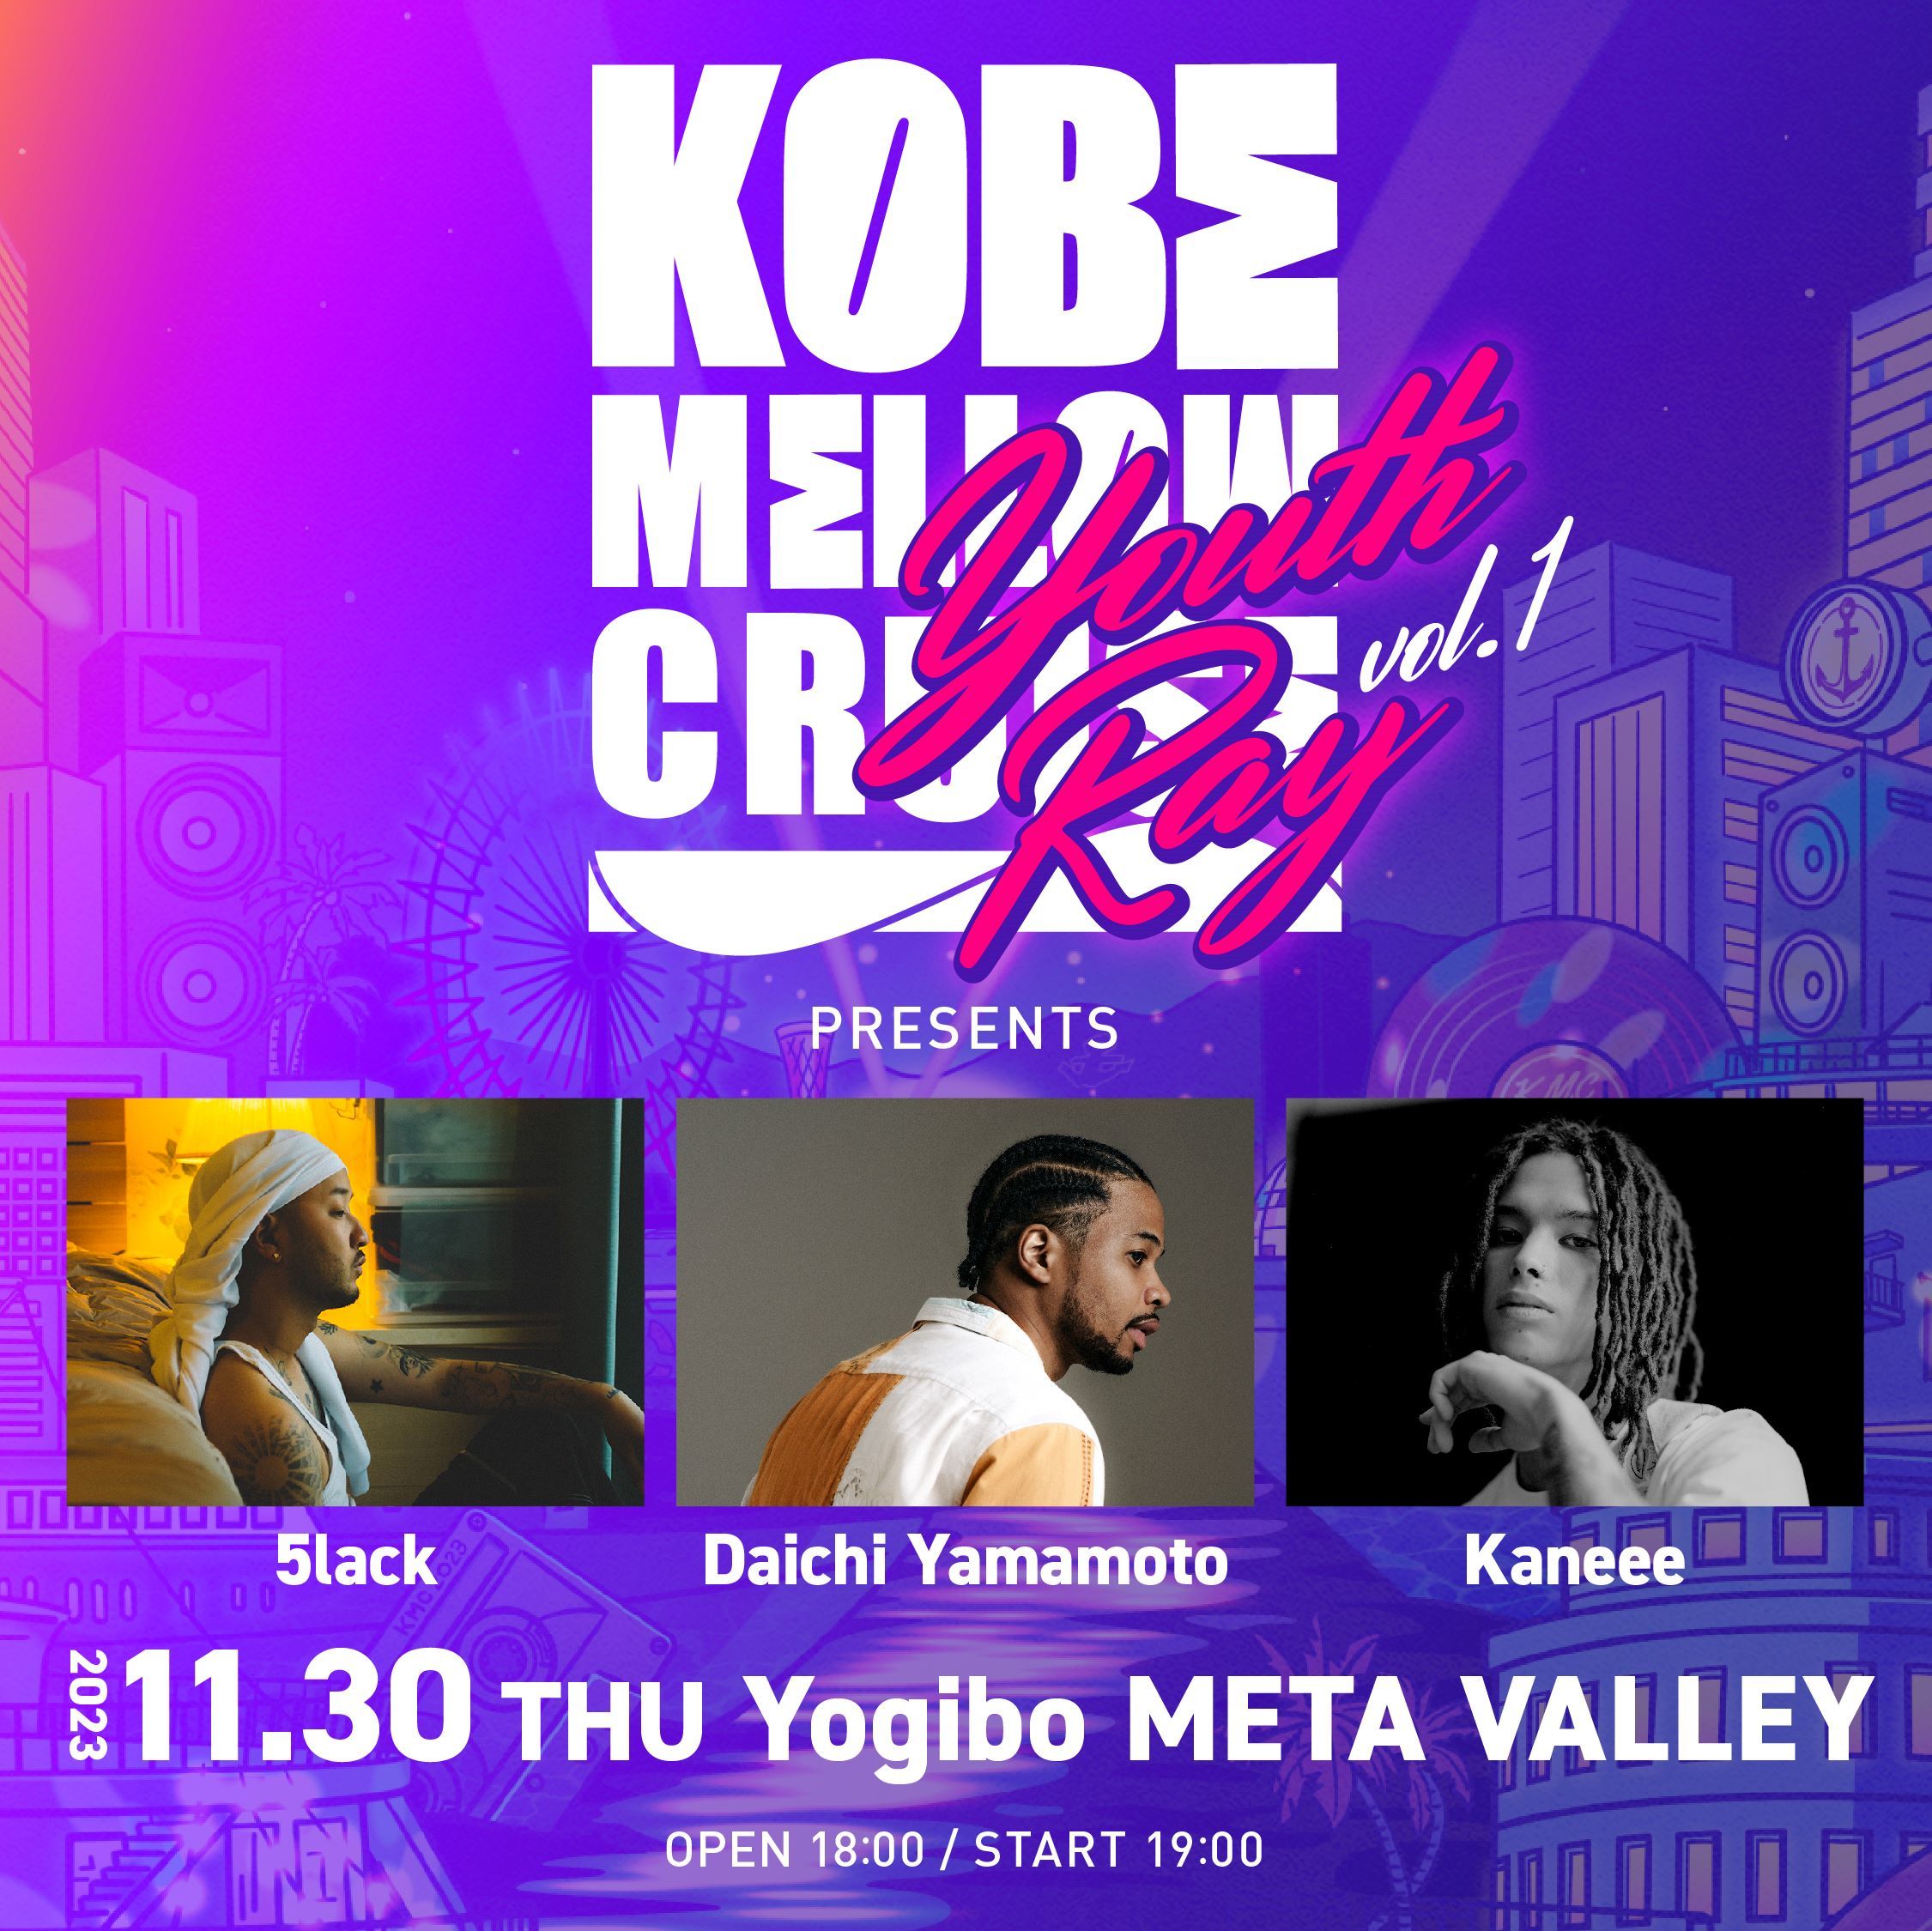 『KOBE MELLOW CRUISE Presents "Youth Ray" Vol.1』